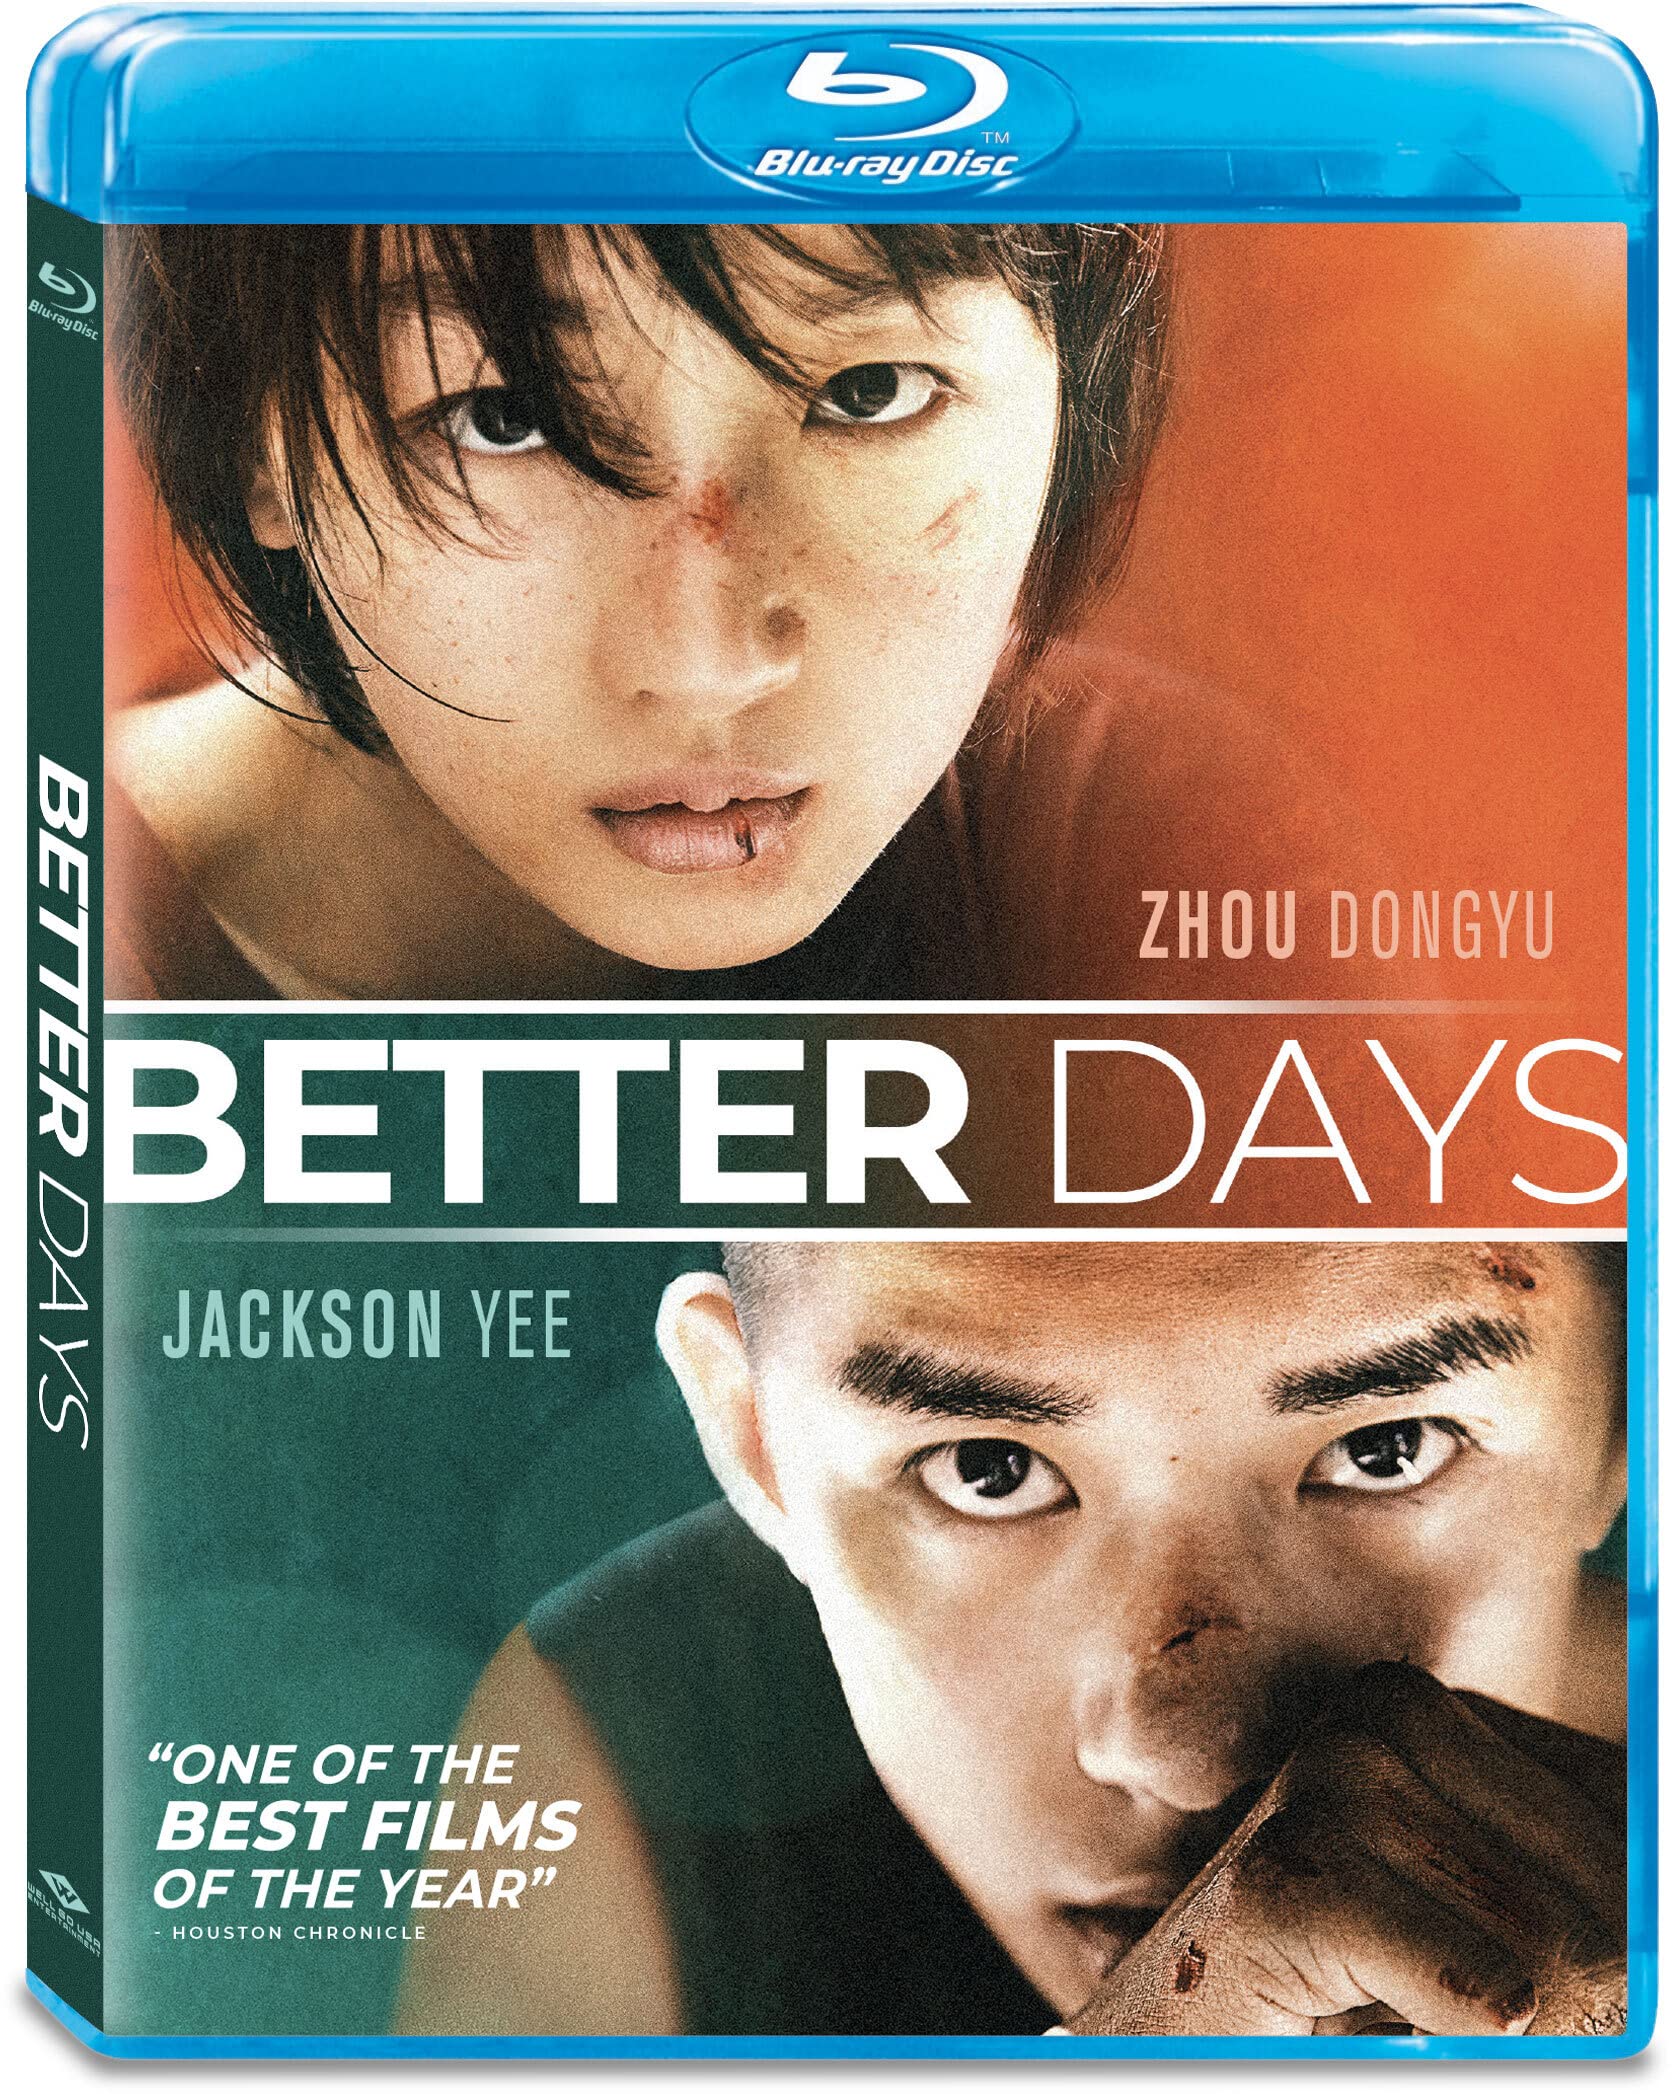 Better Days [Blu-ray] on MovieShack